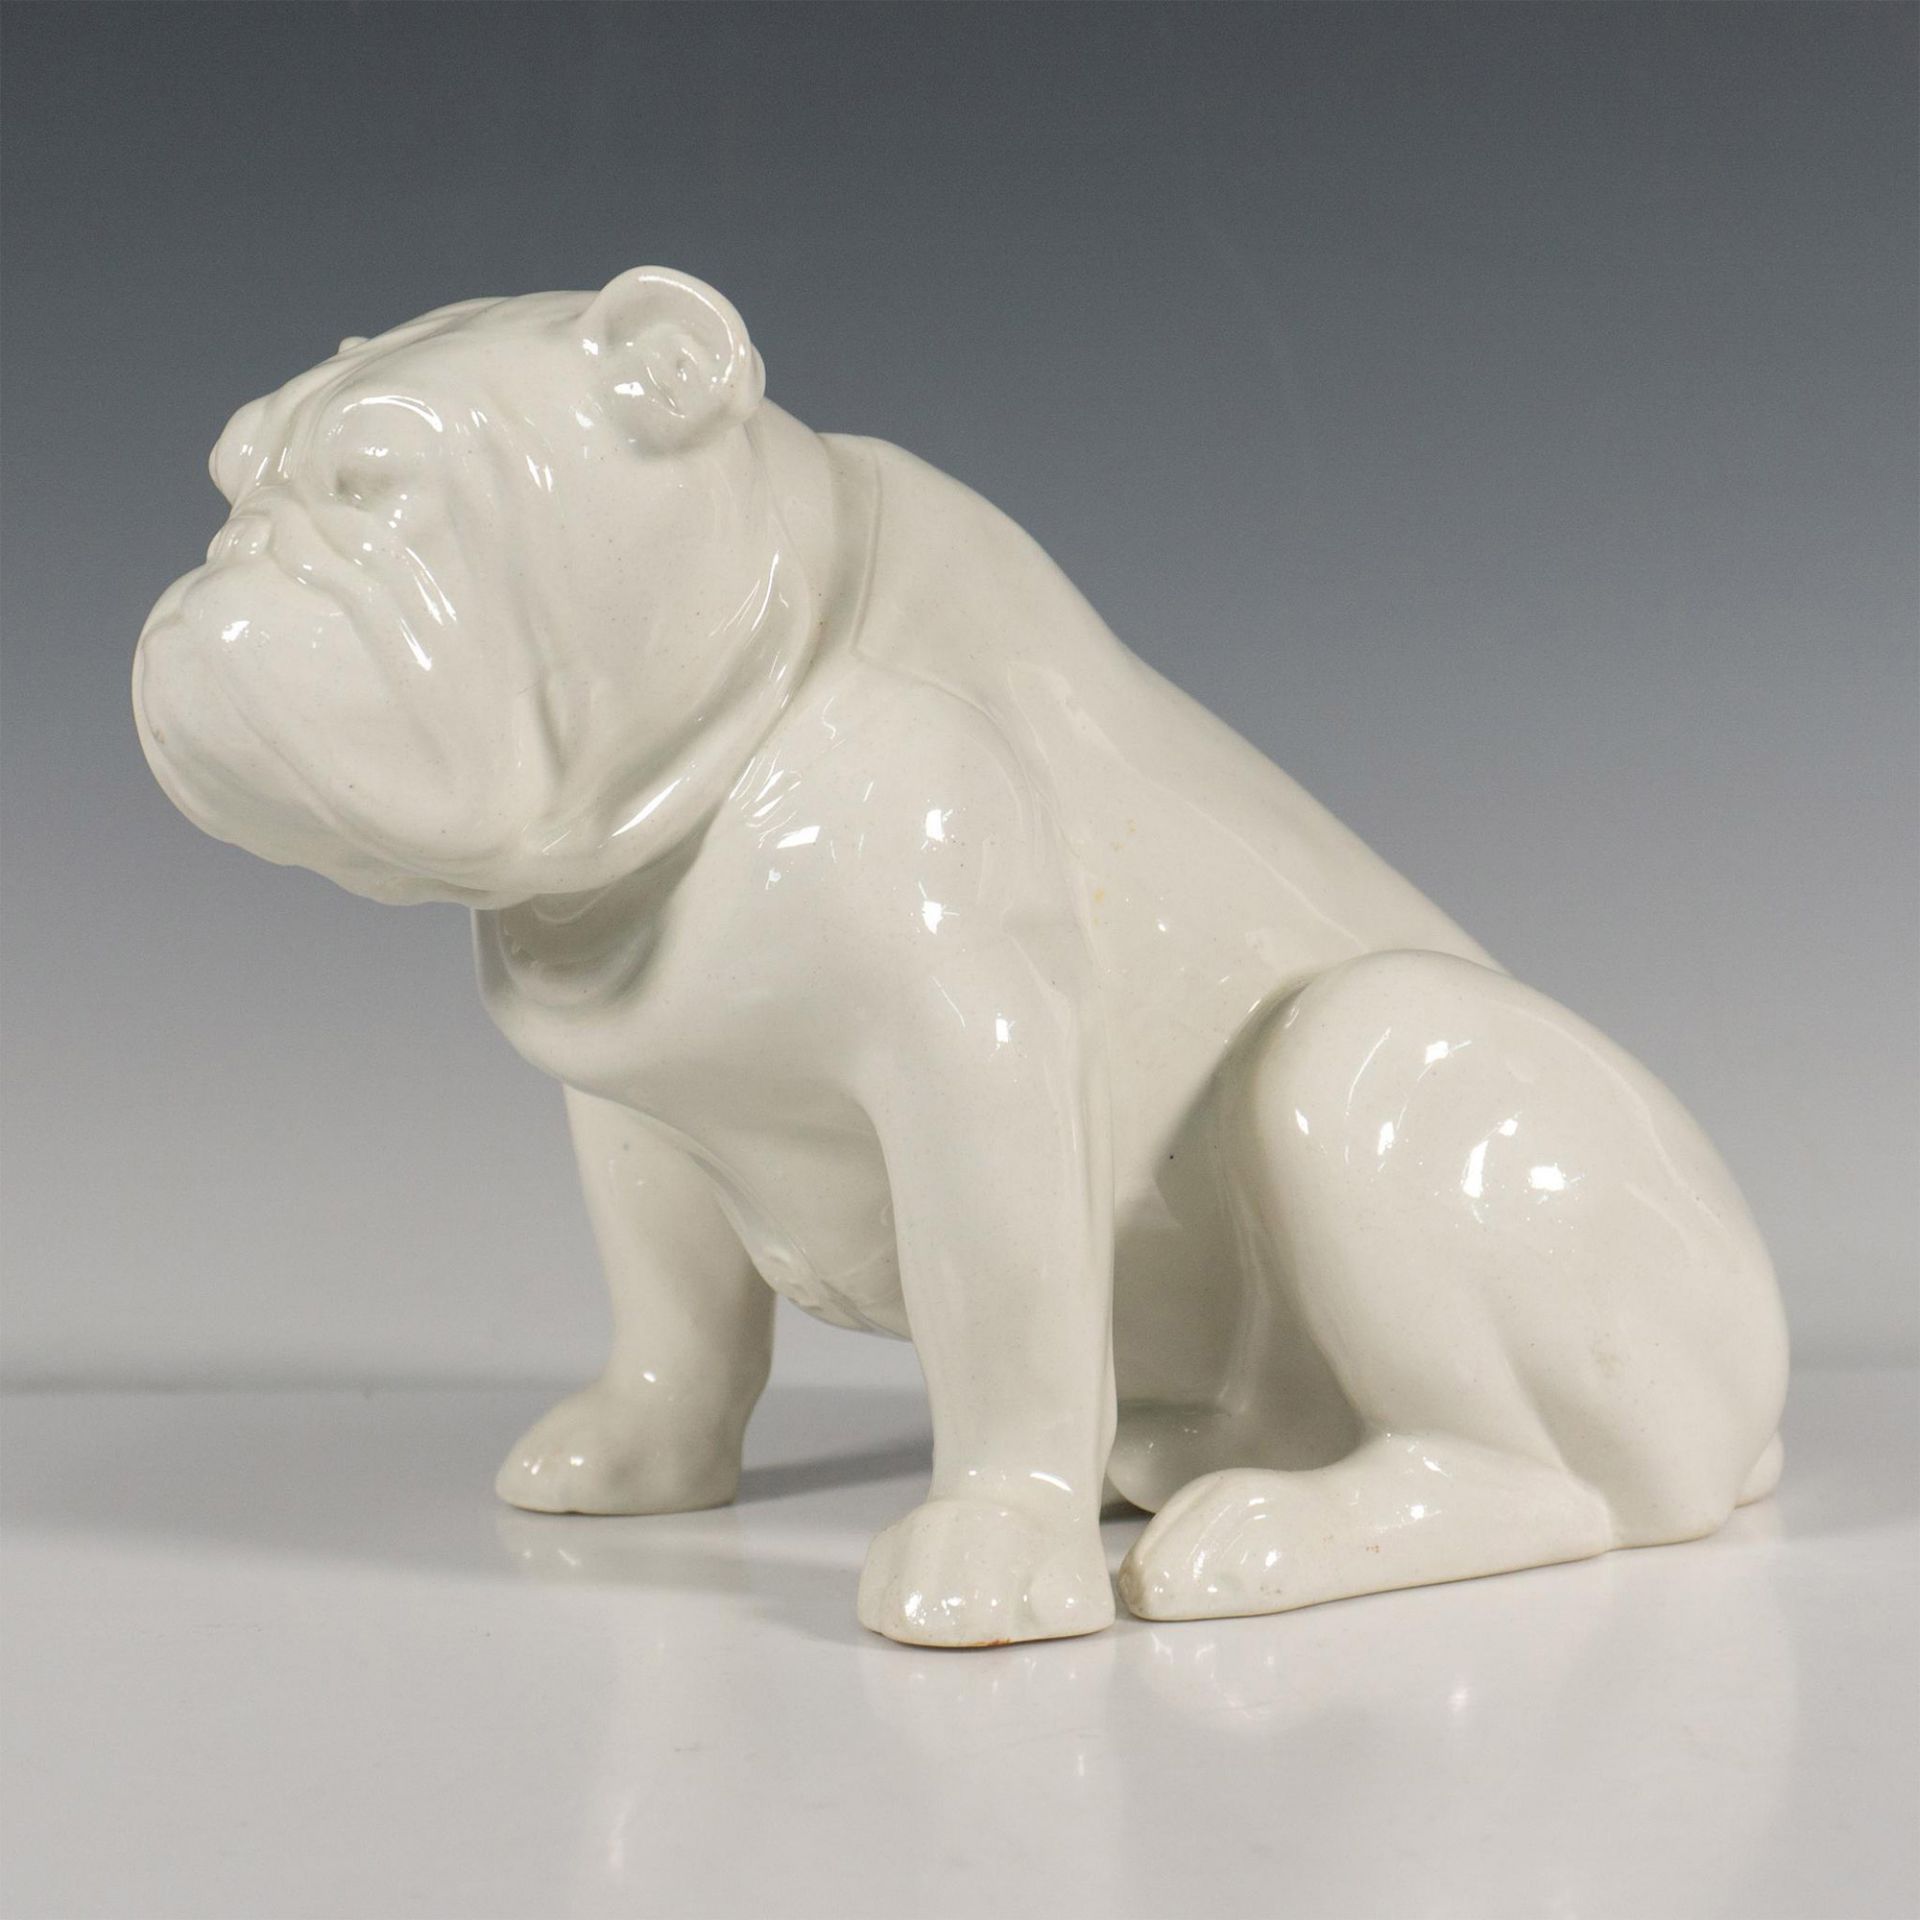 Advertising Bulldog - Royal Doulton Prototype Figurine - Image 2 of 5